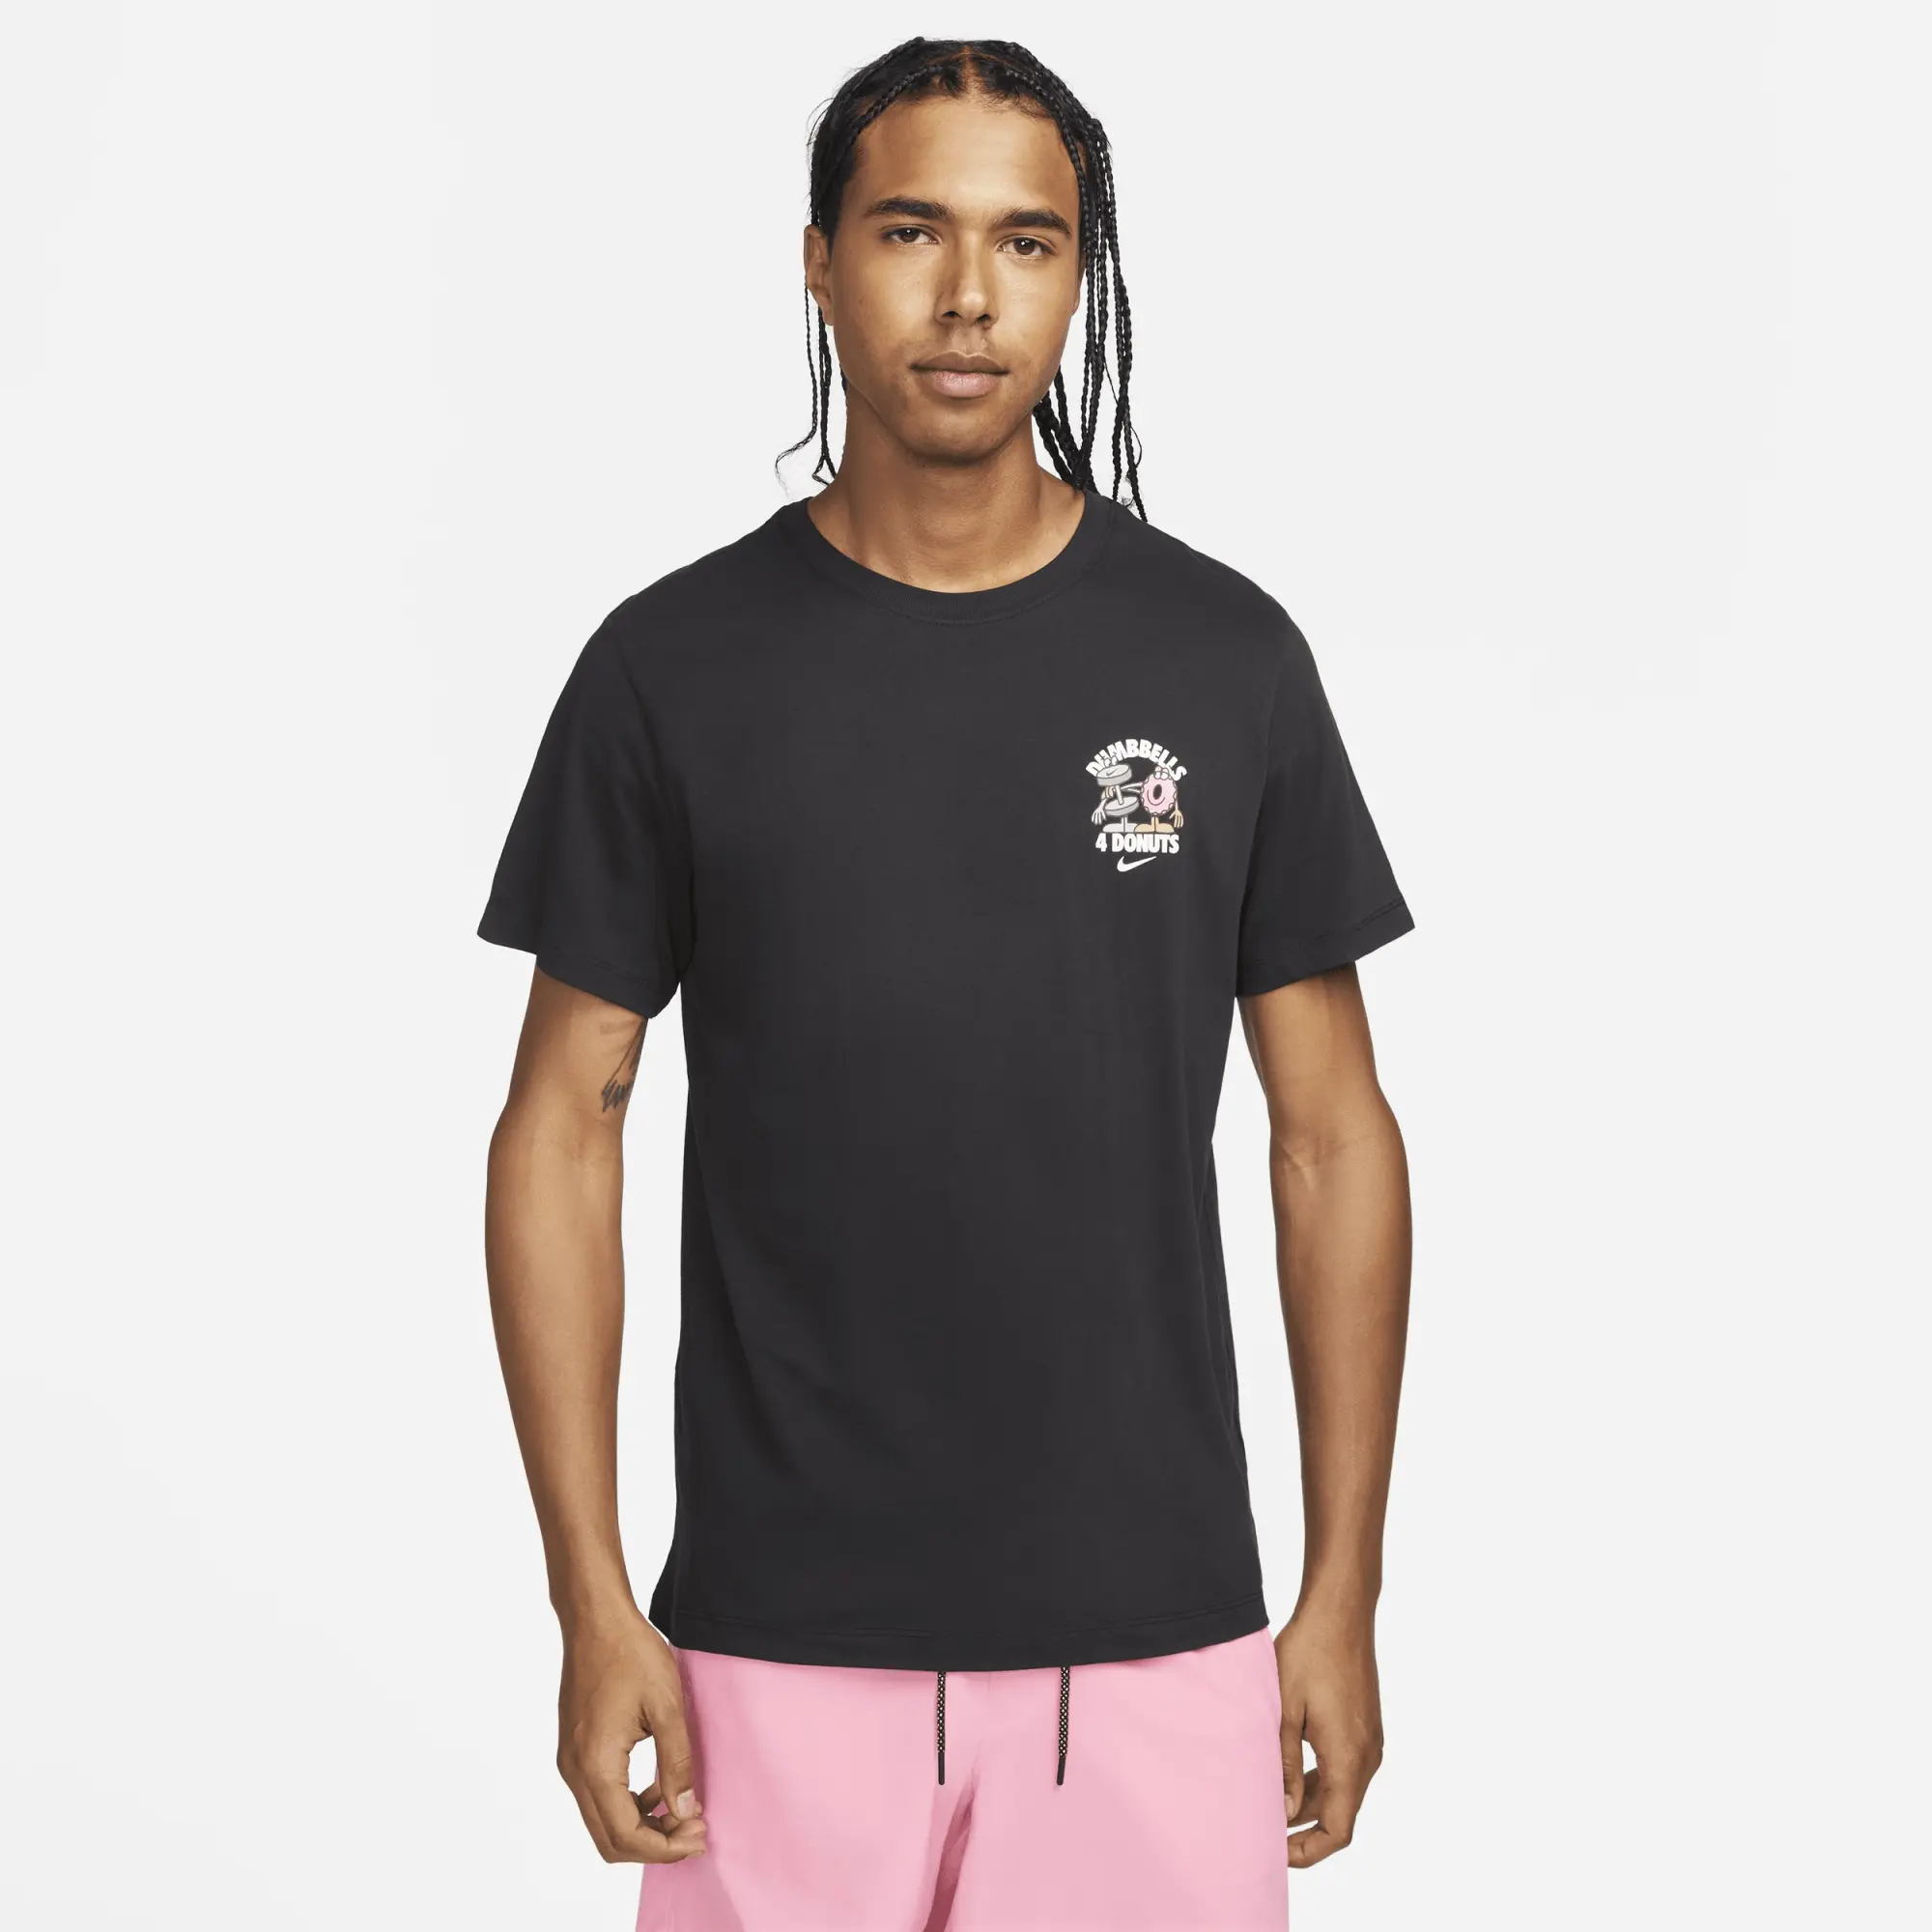 Nike Donuts T-Shirt, Black